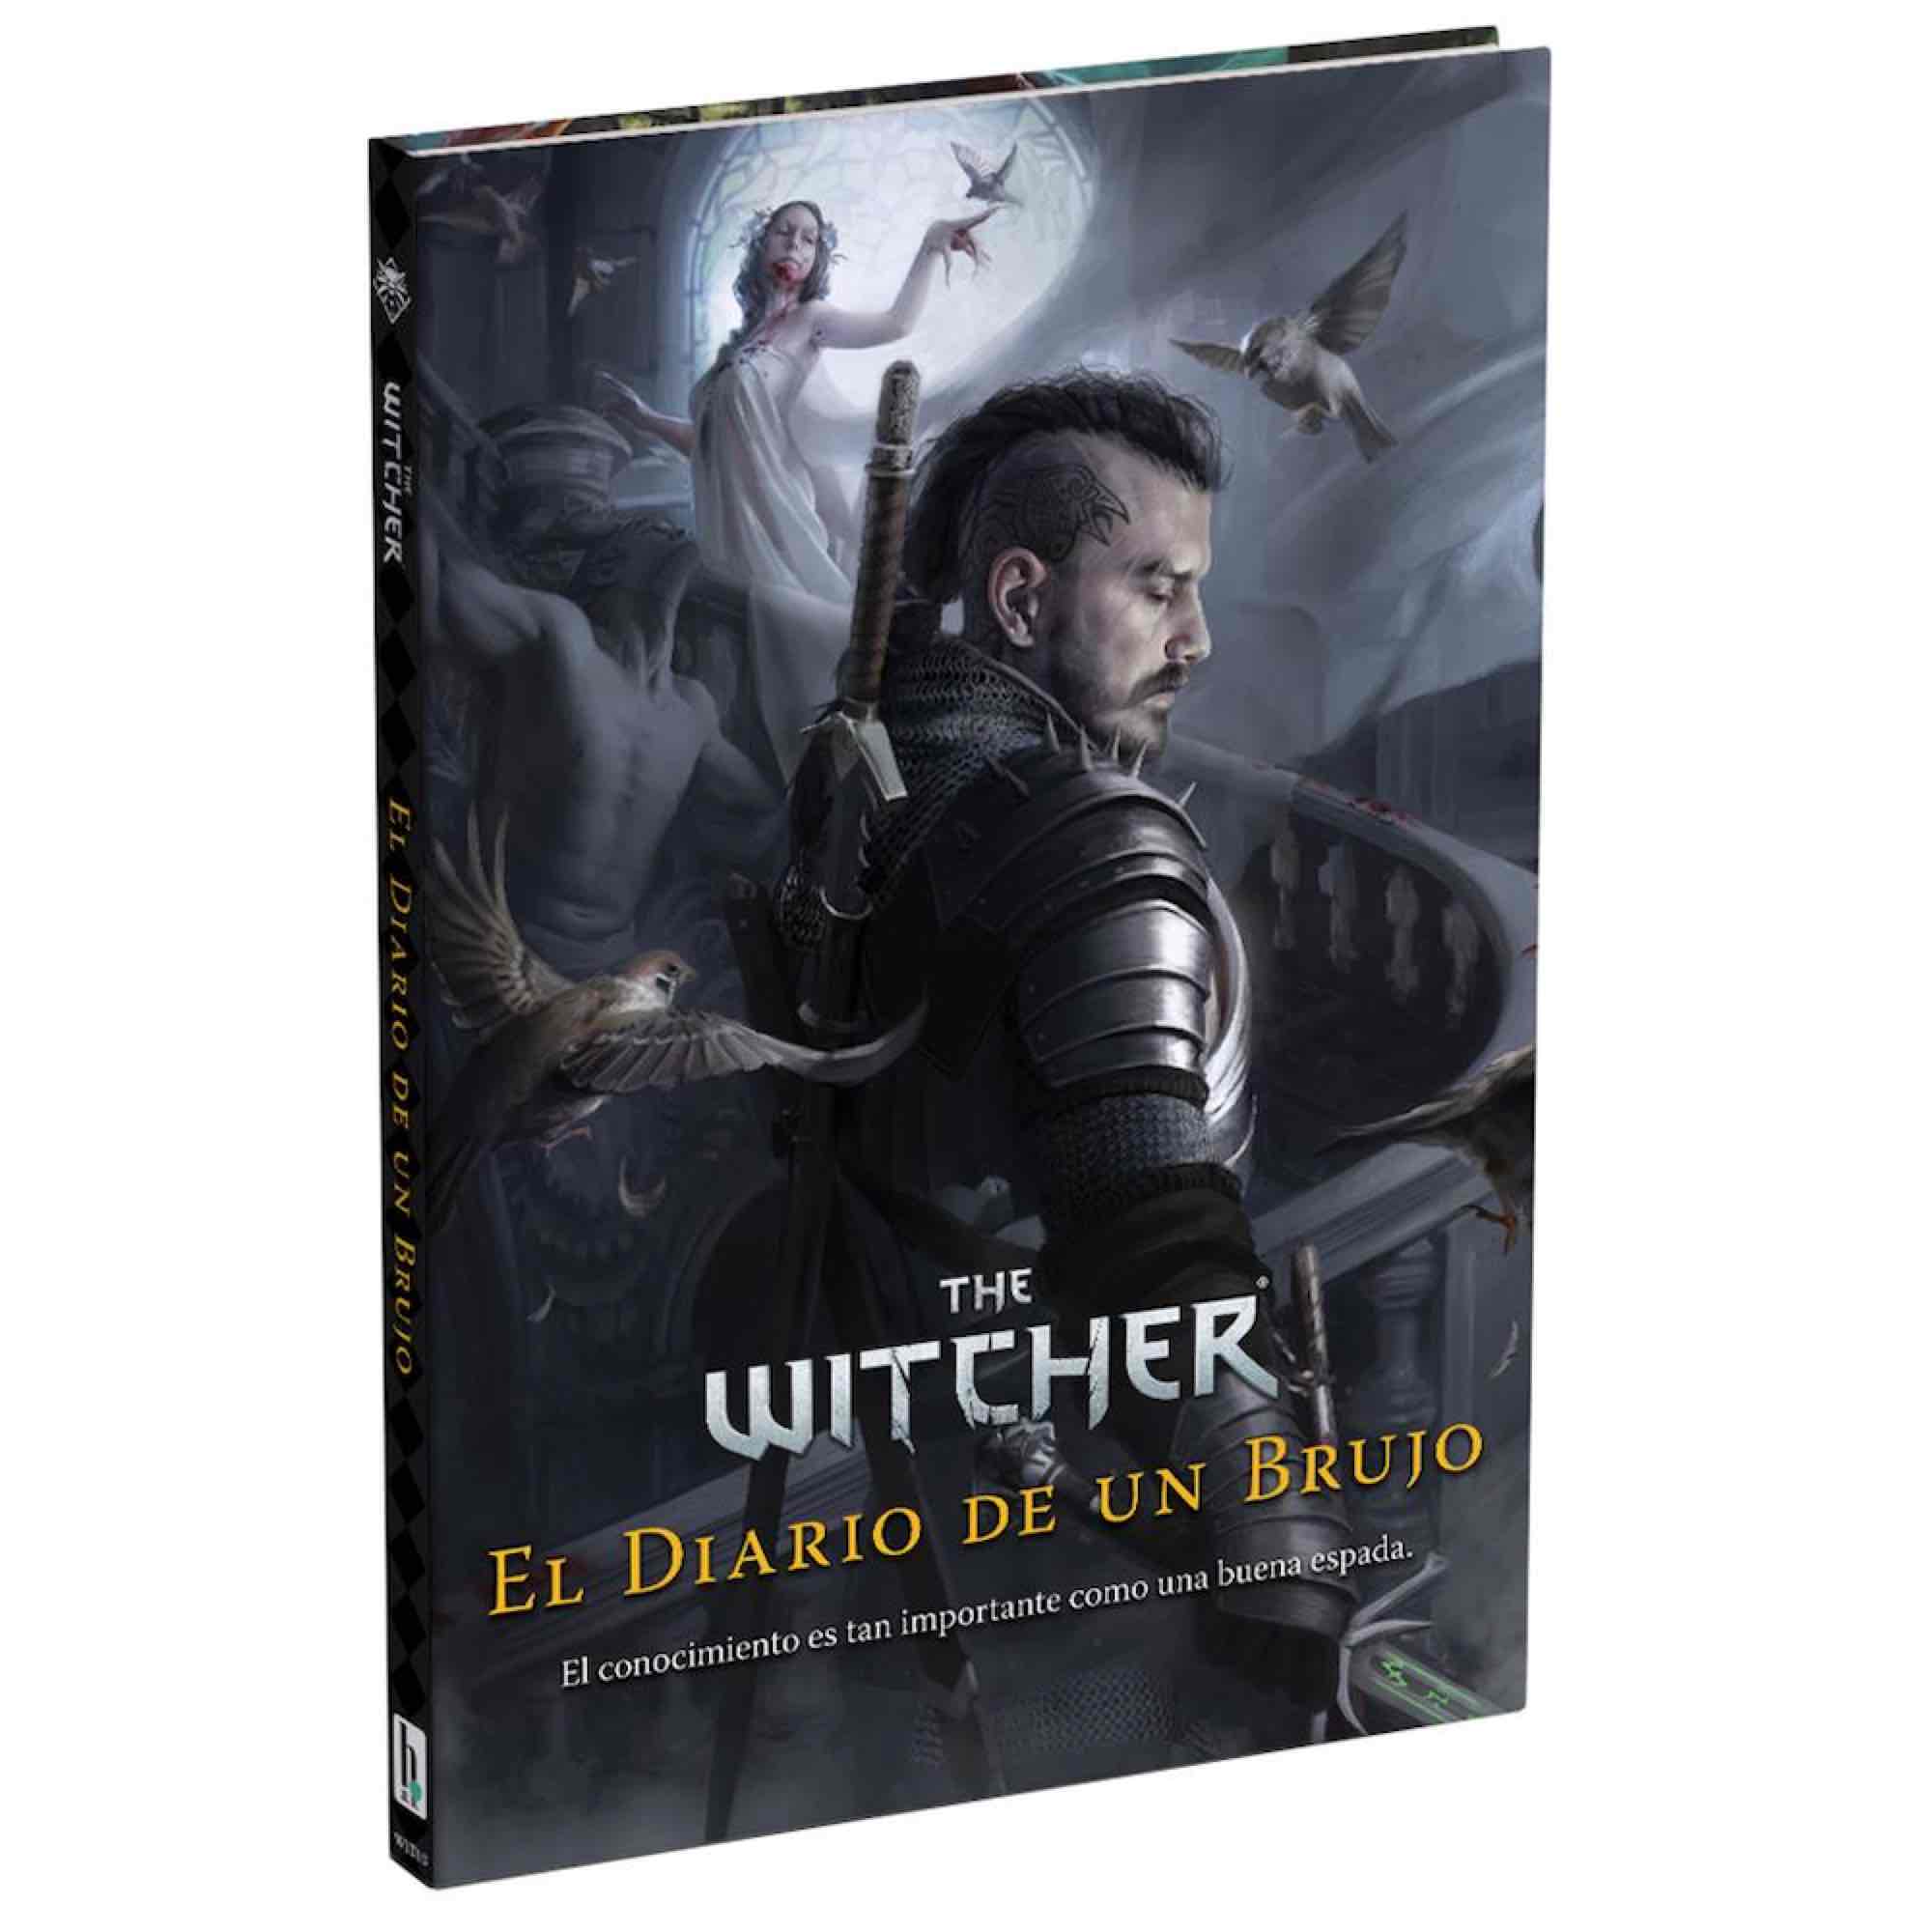 THE WITCHER DIARIO DE UN BRUJO